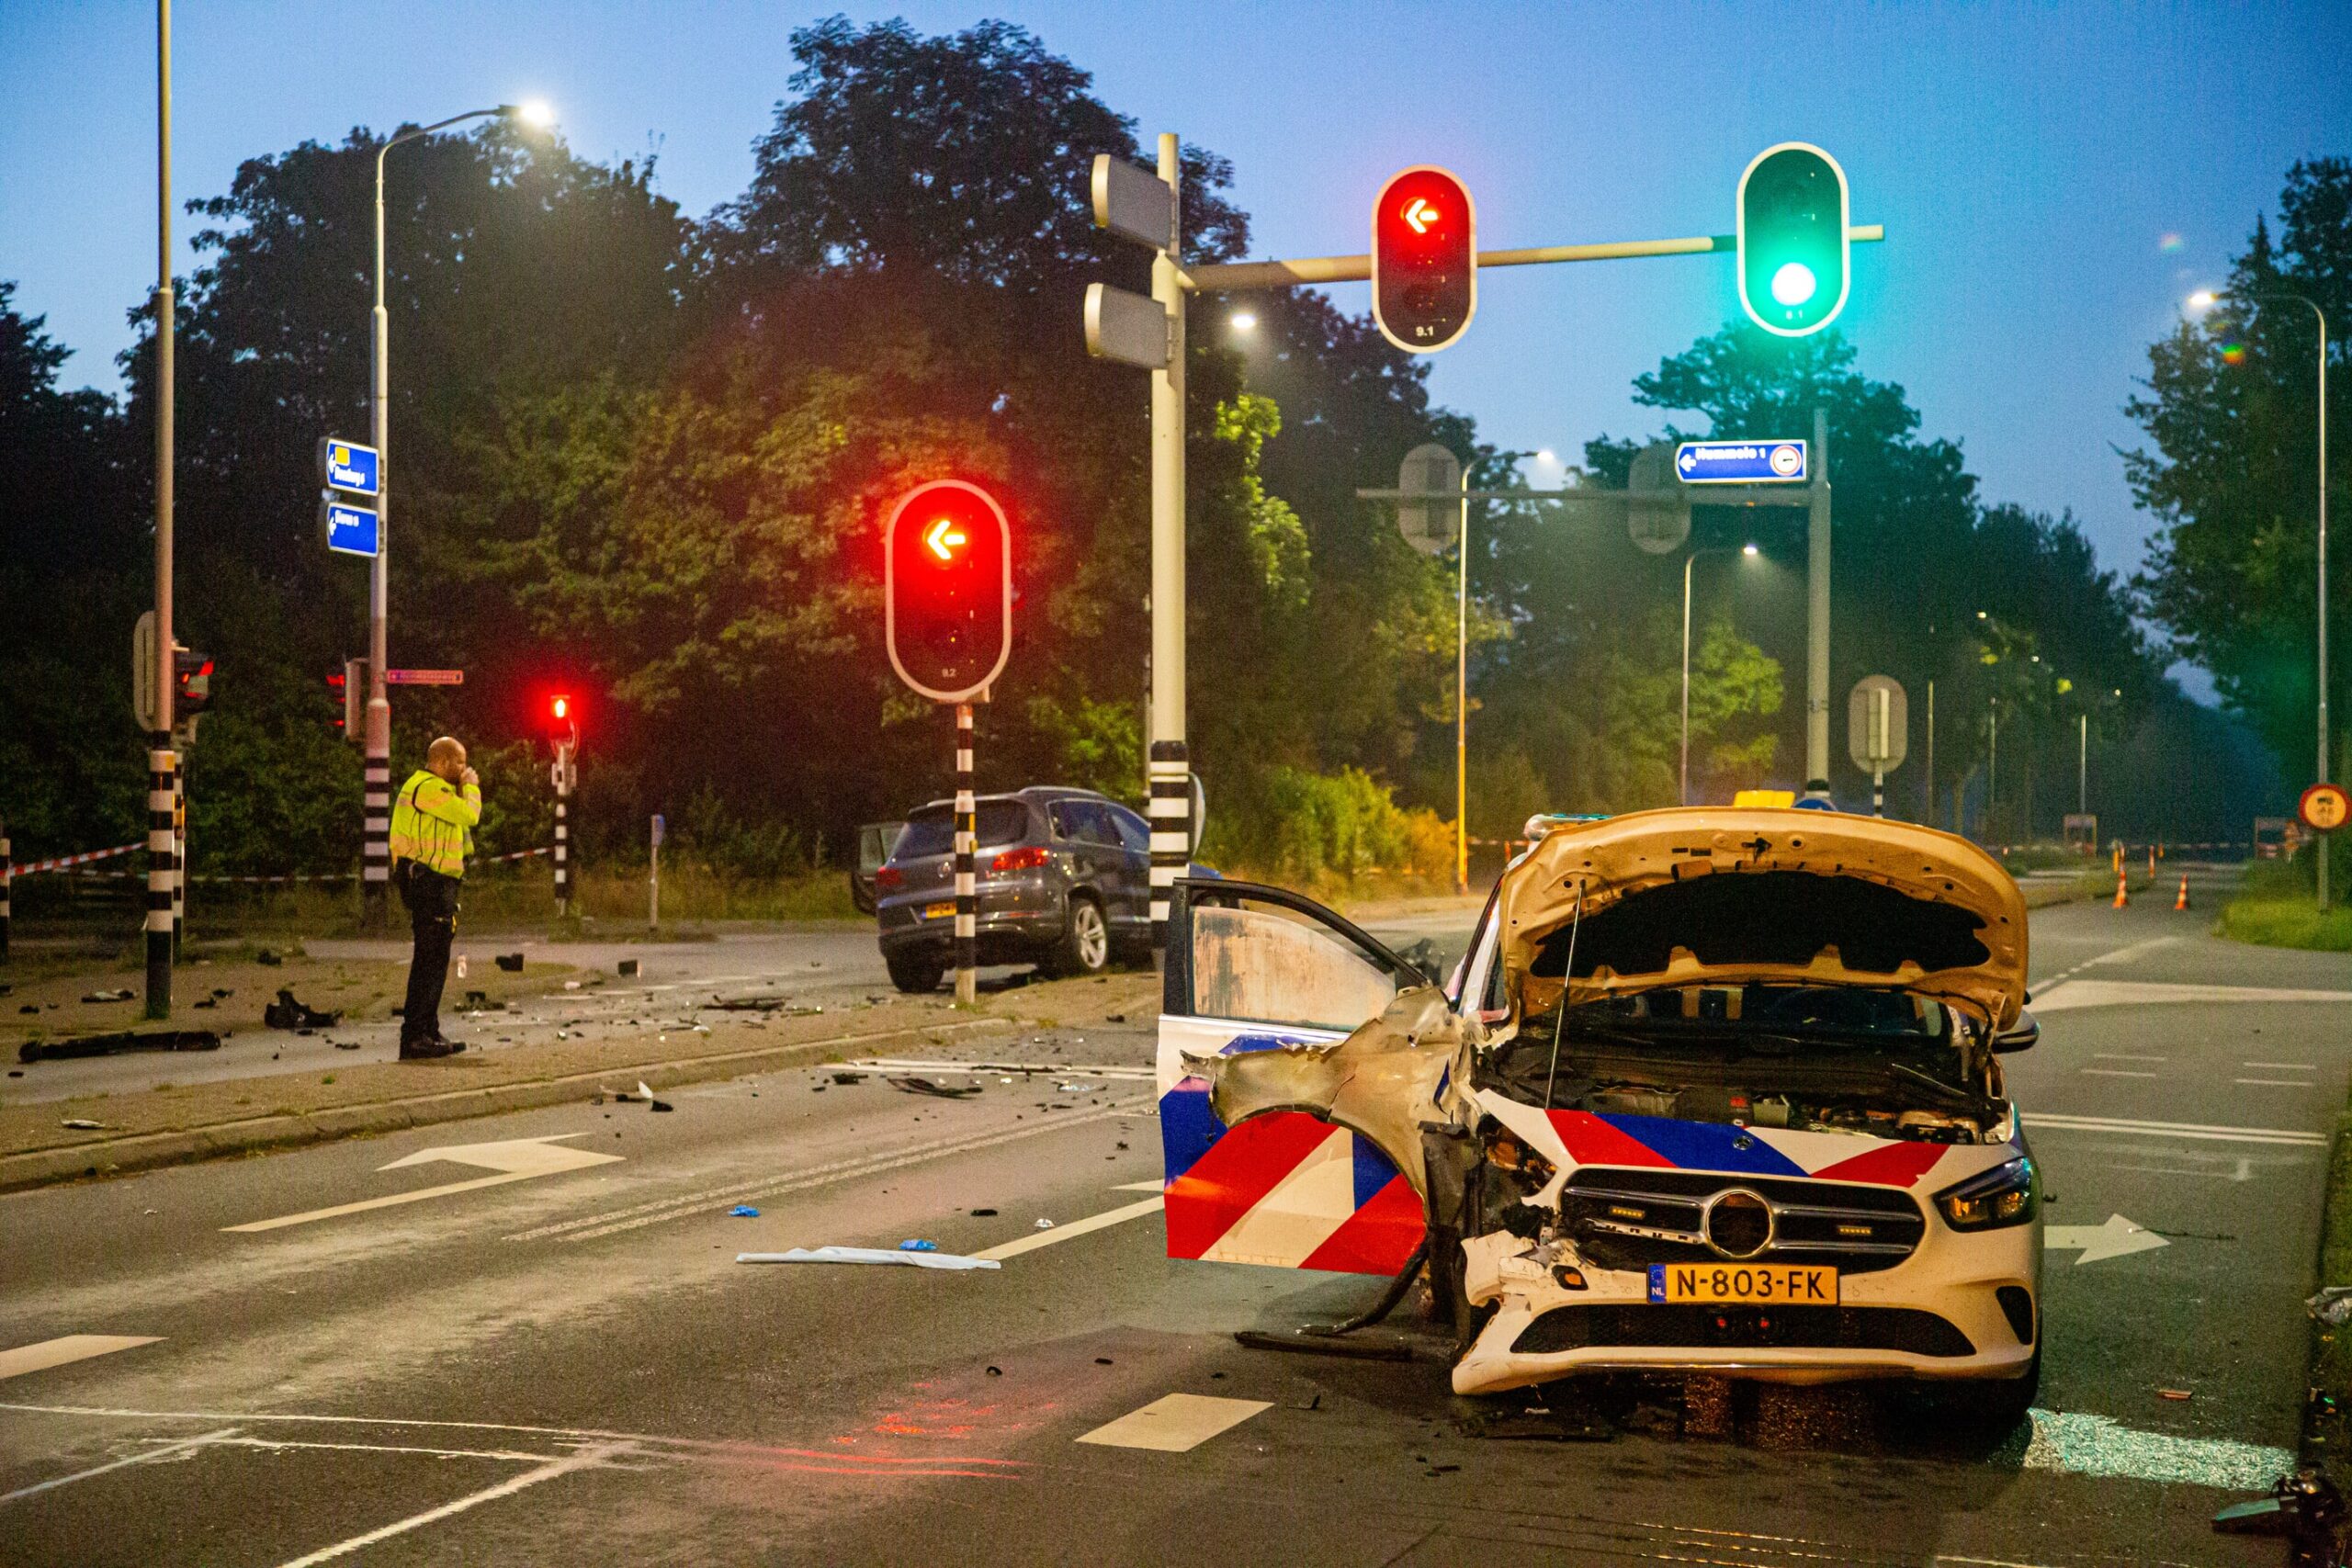 Politievoertuig in botsing met personenauto tijdens spoedrit